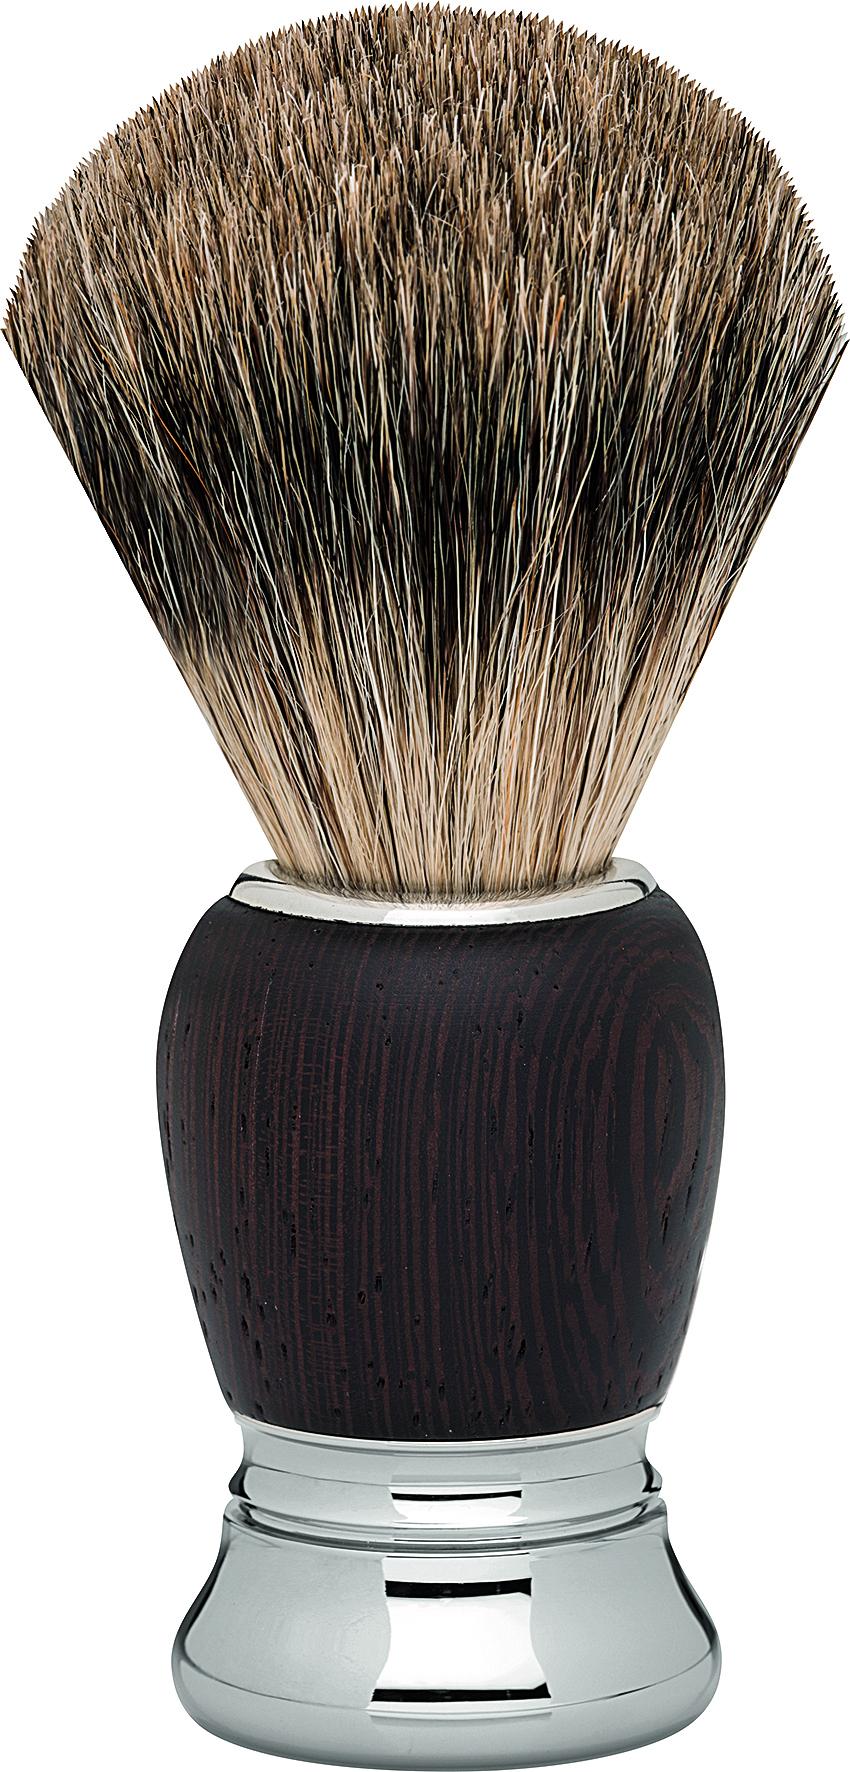 Erbe Shaving brush badger hair wenge wood MILANO